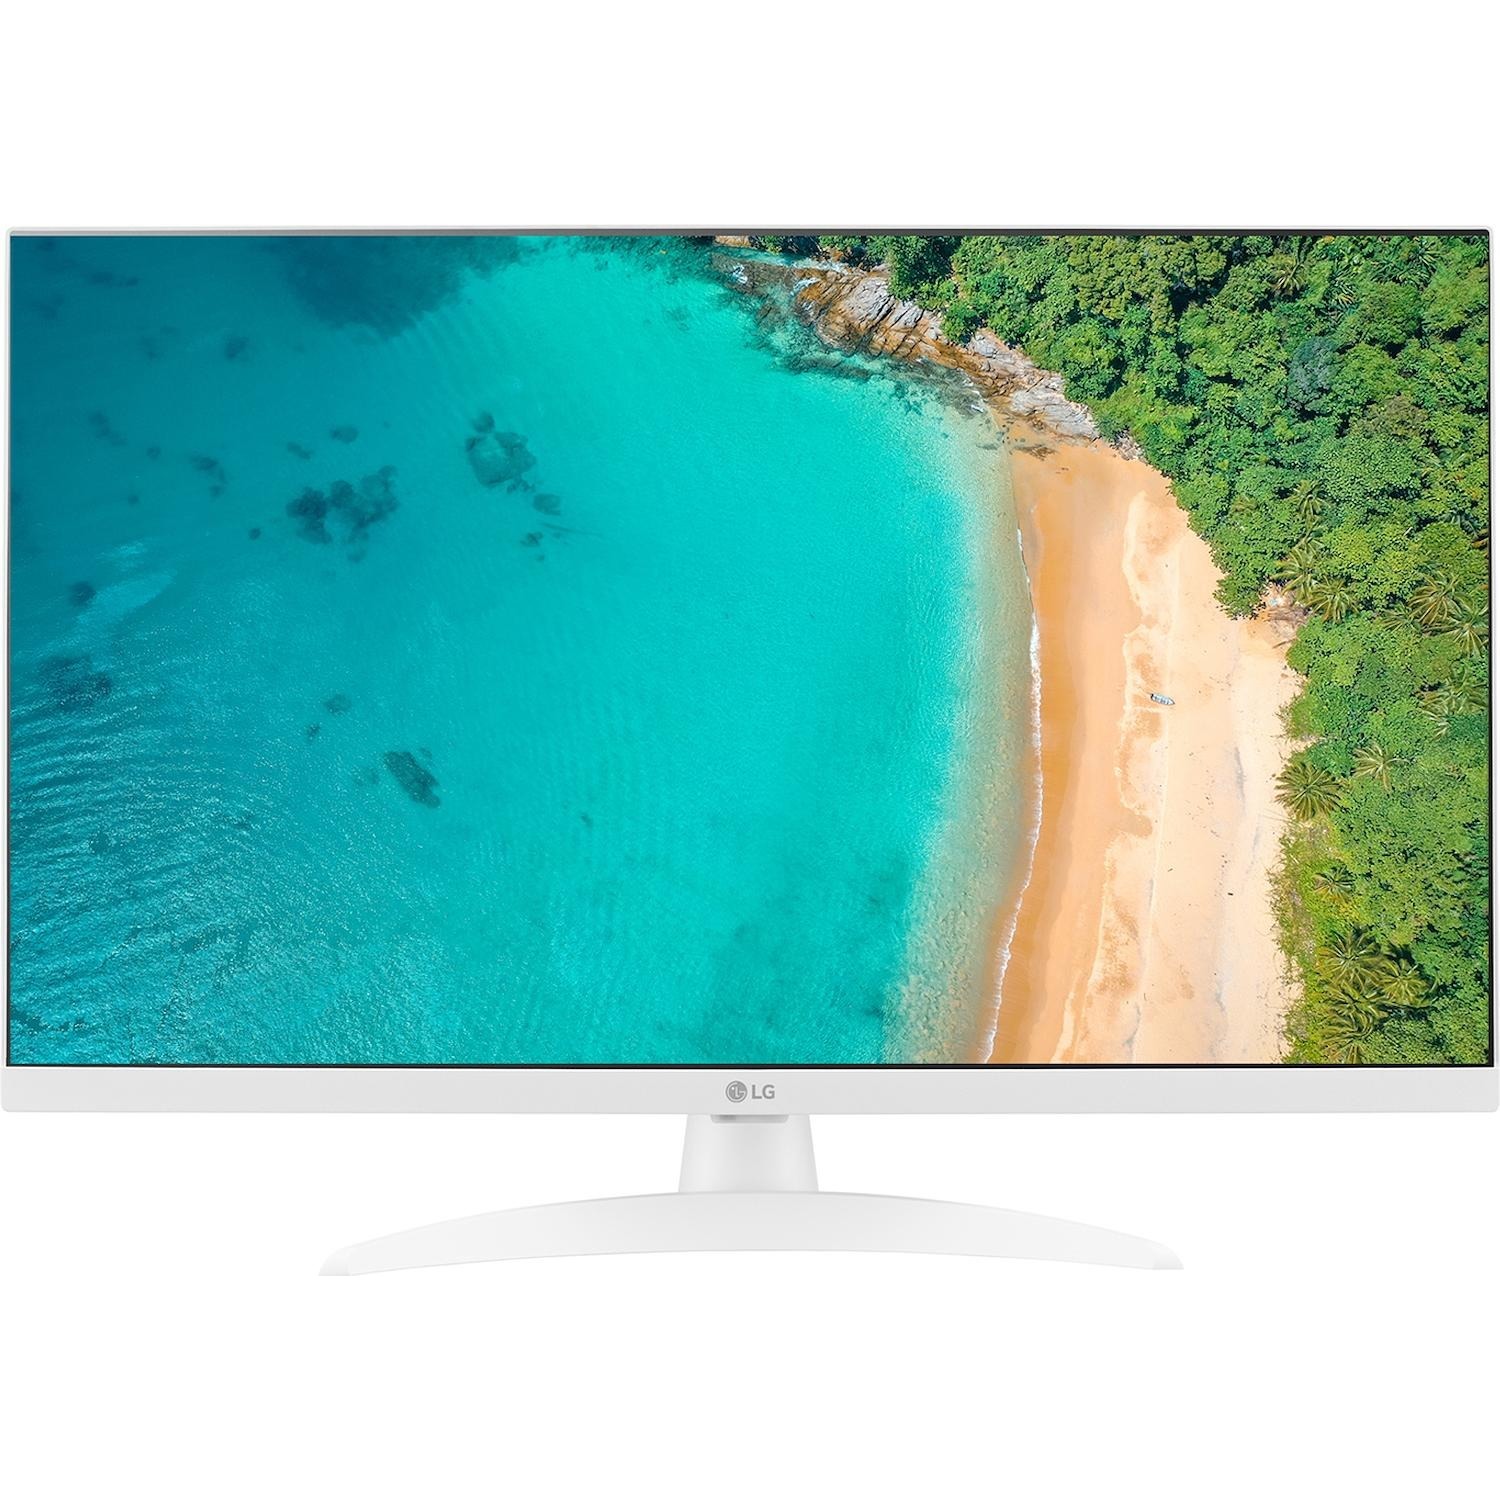 Immagine per TV LED Monitor Smart LG 27TQ615S-WZ bianco da DIMOStore